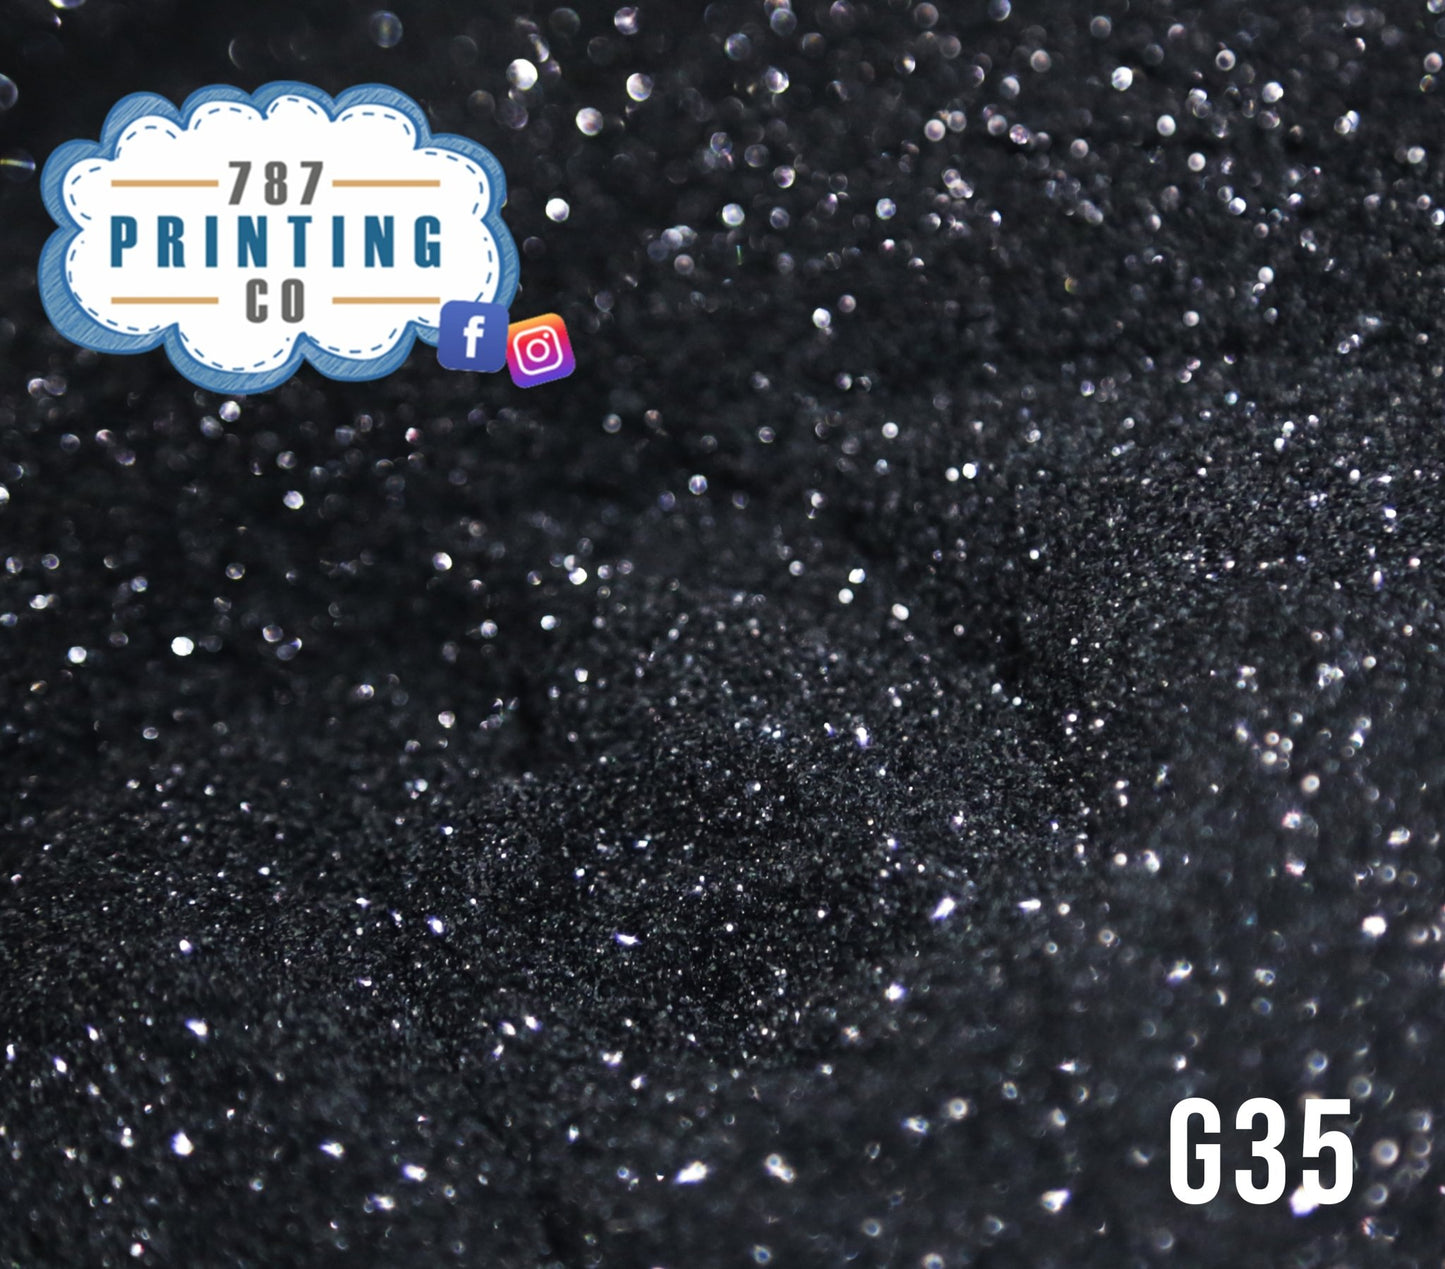 Toro Negro Ultra Fine Glitter 1/128 - 787 Printing Co.